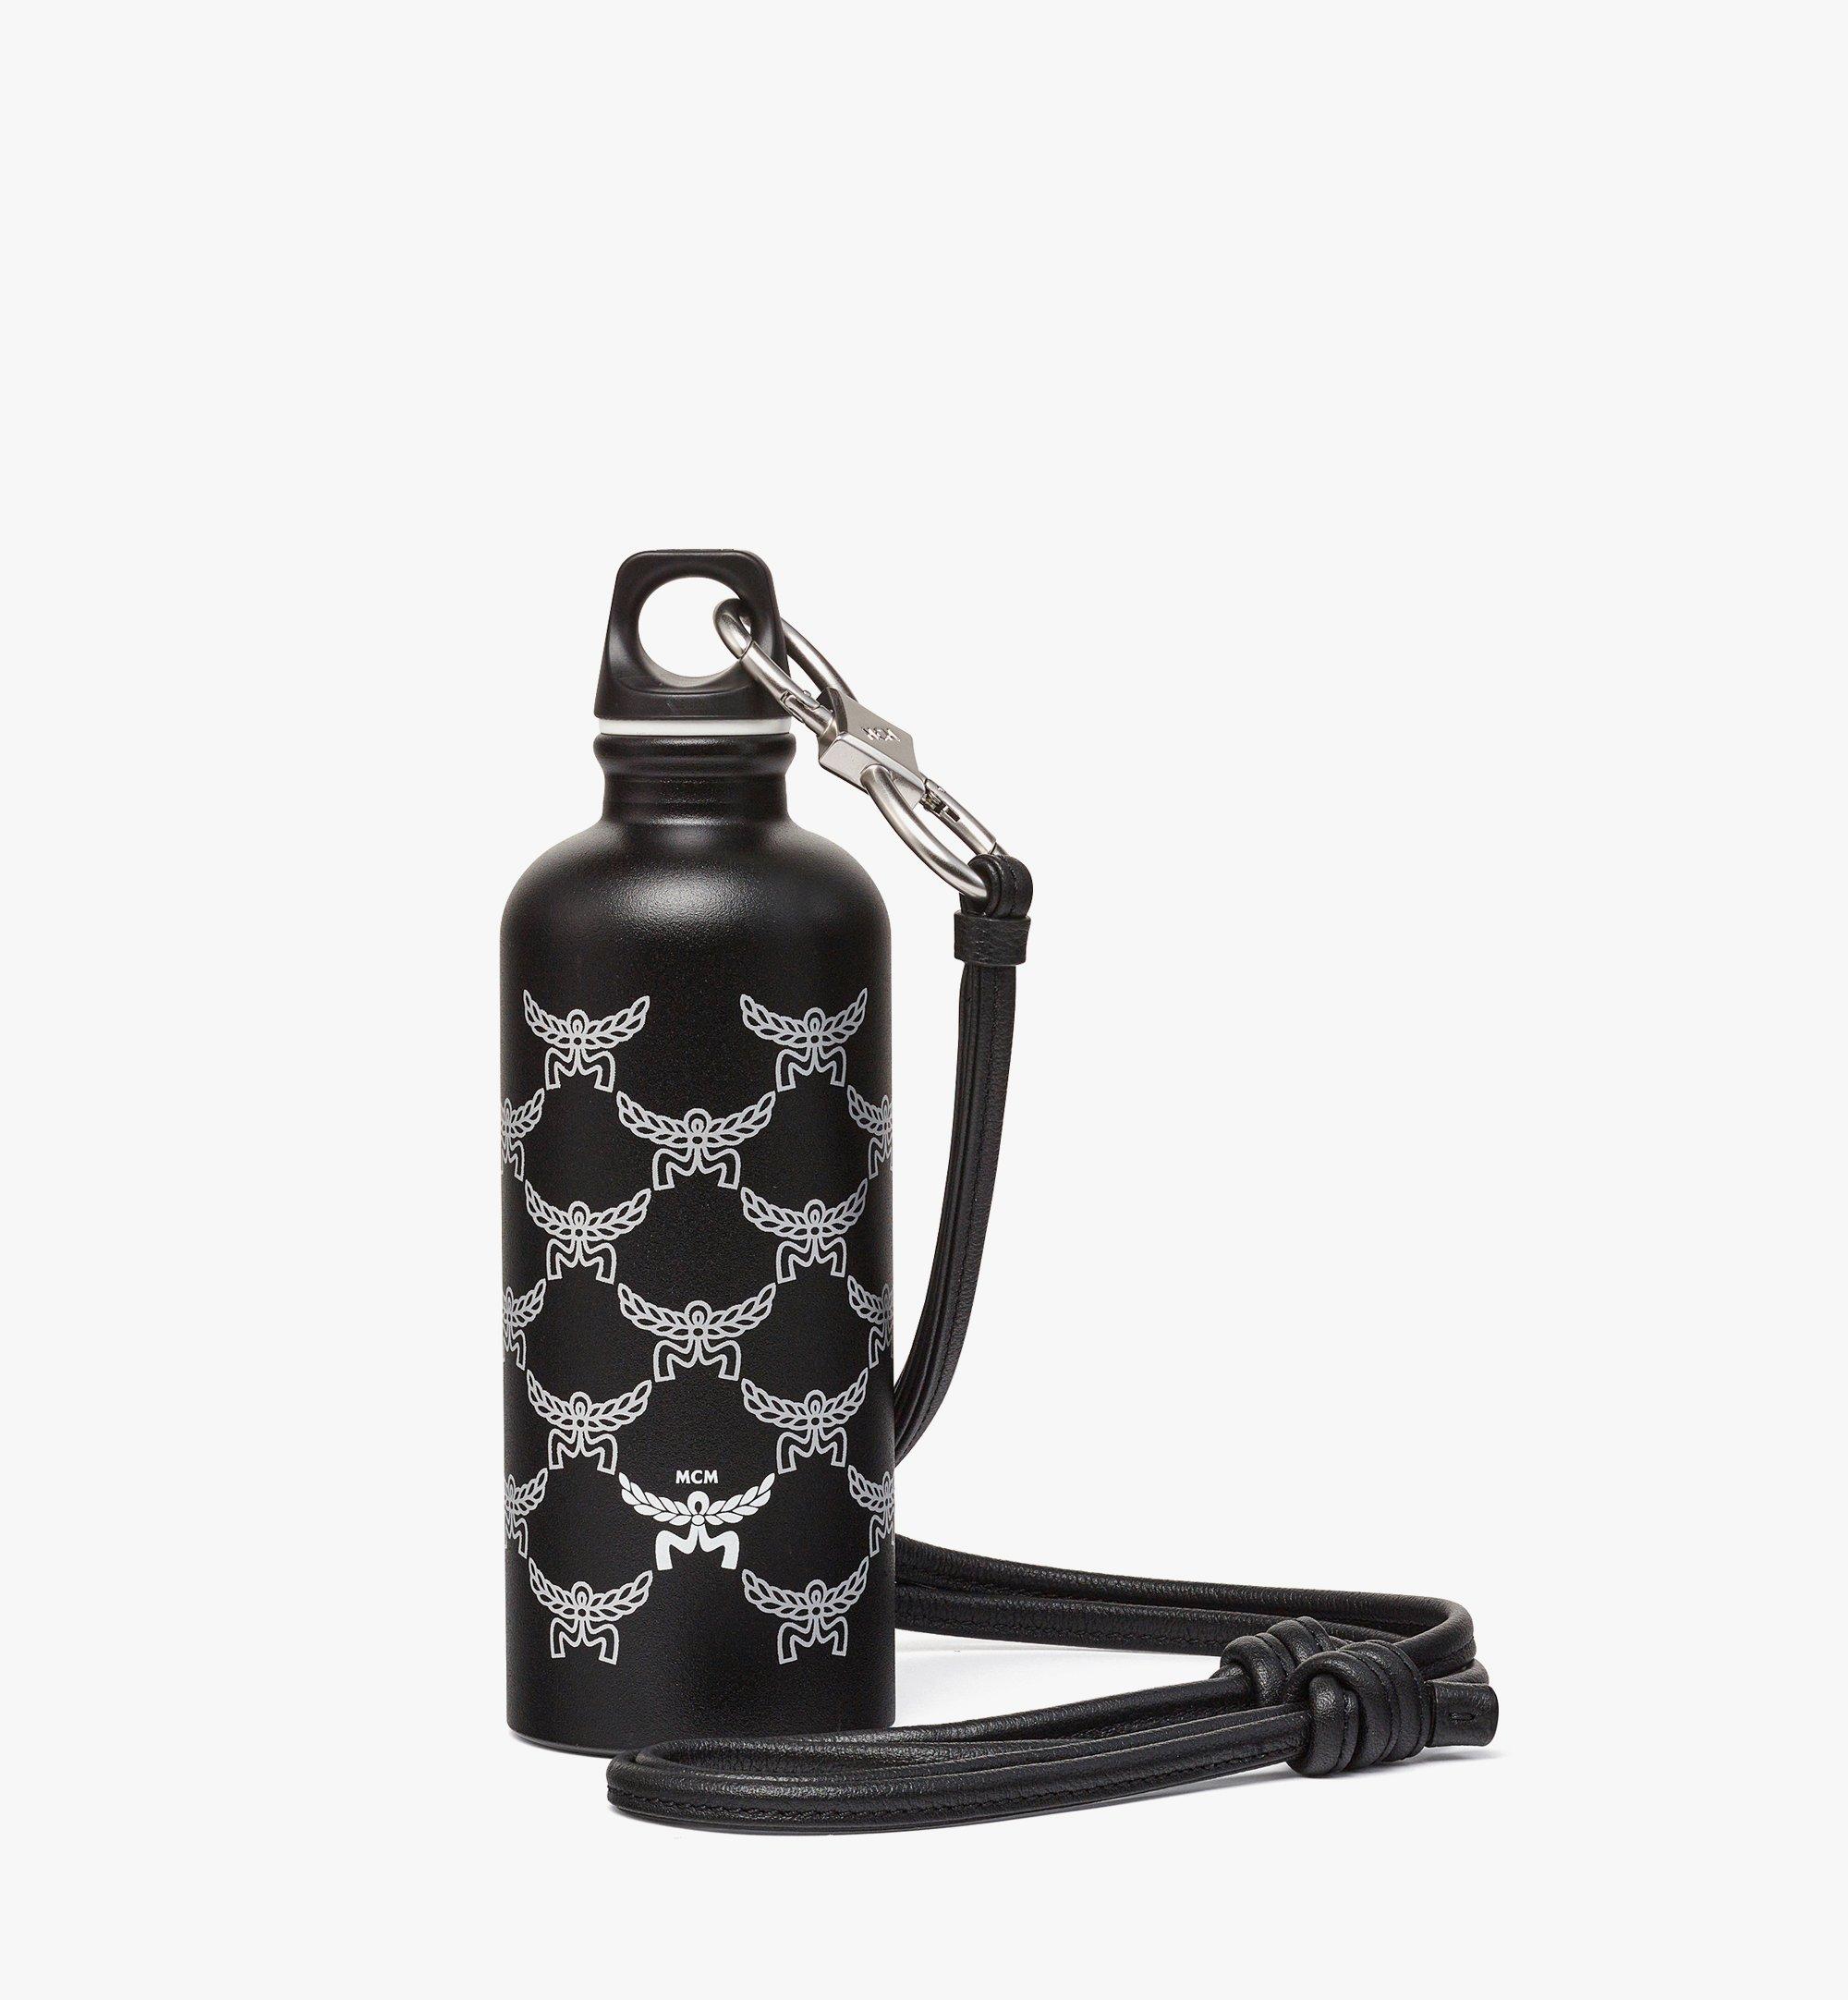 Sigg Water Bottle - 1L - Accessories